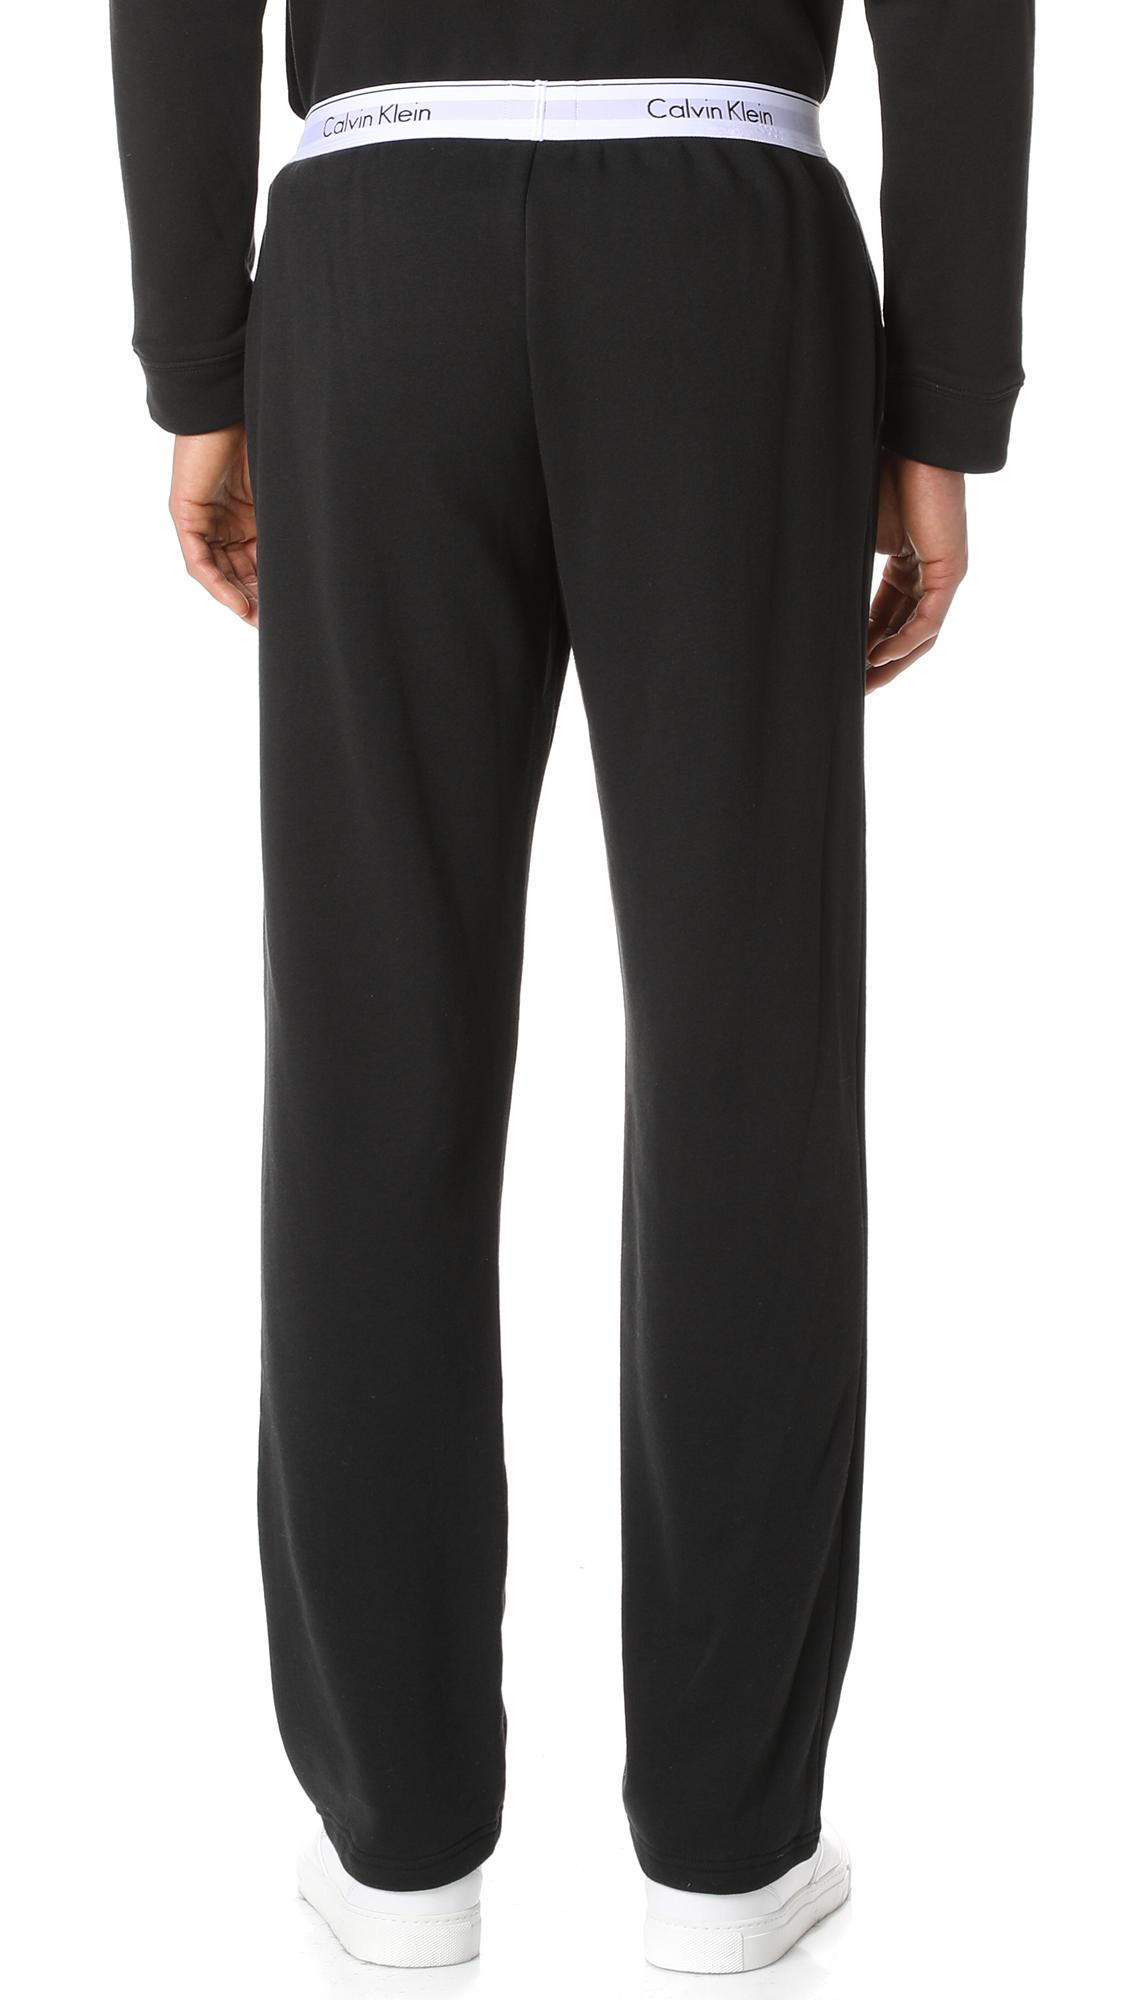 Lyst - Calvin Klein Modern Cotton Sweatpants in Black for Men